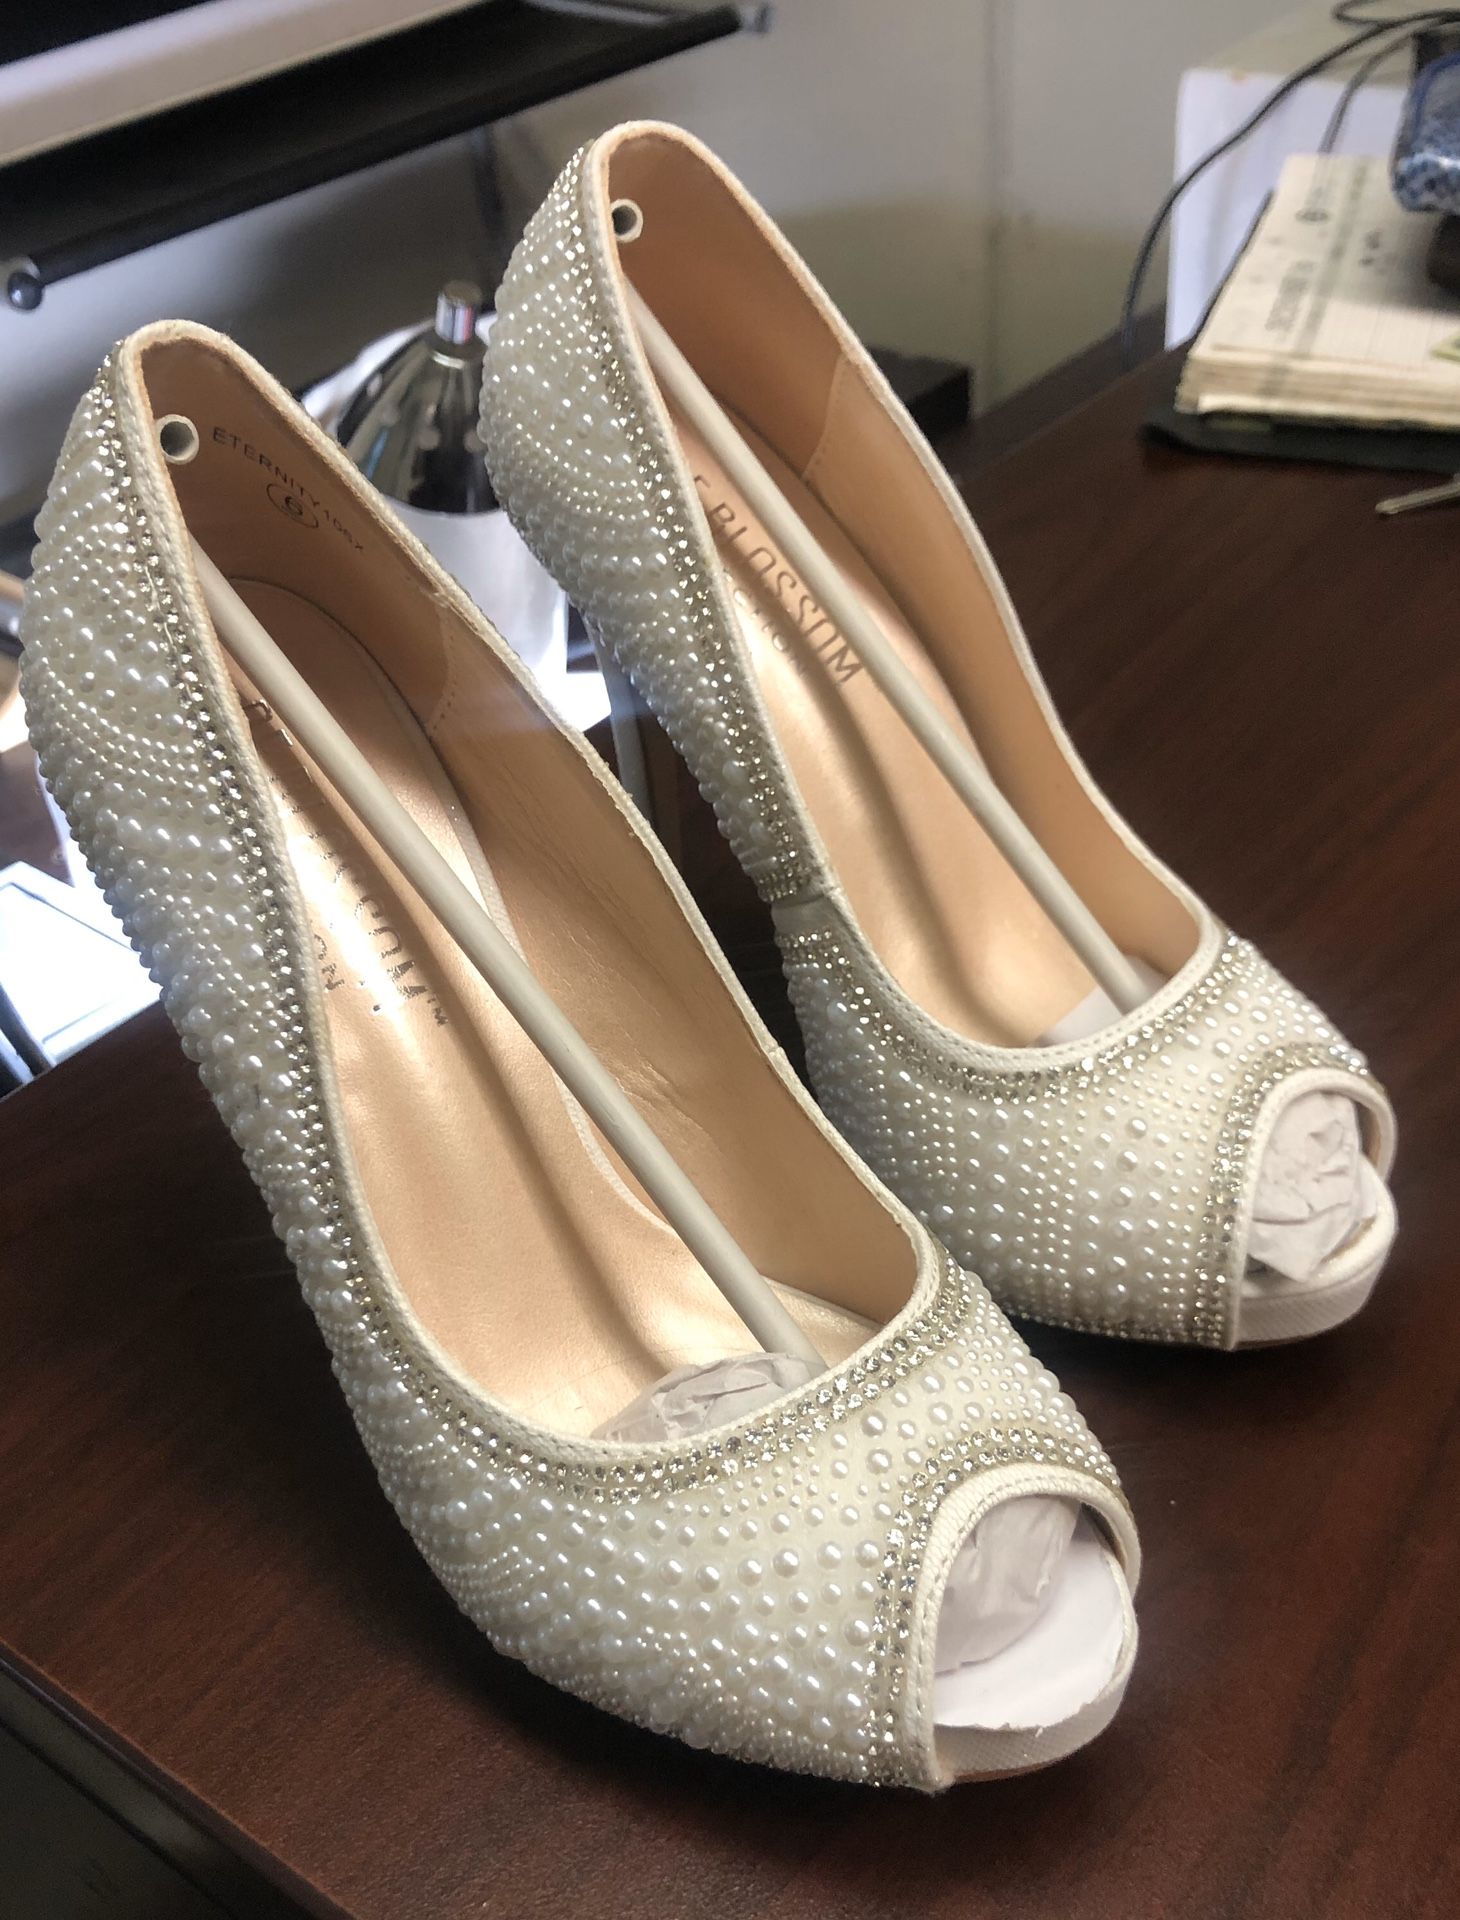 Women’s Size 6 wedding shoes never worn